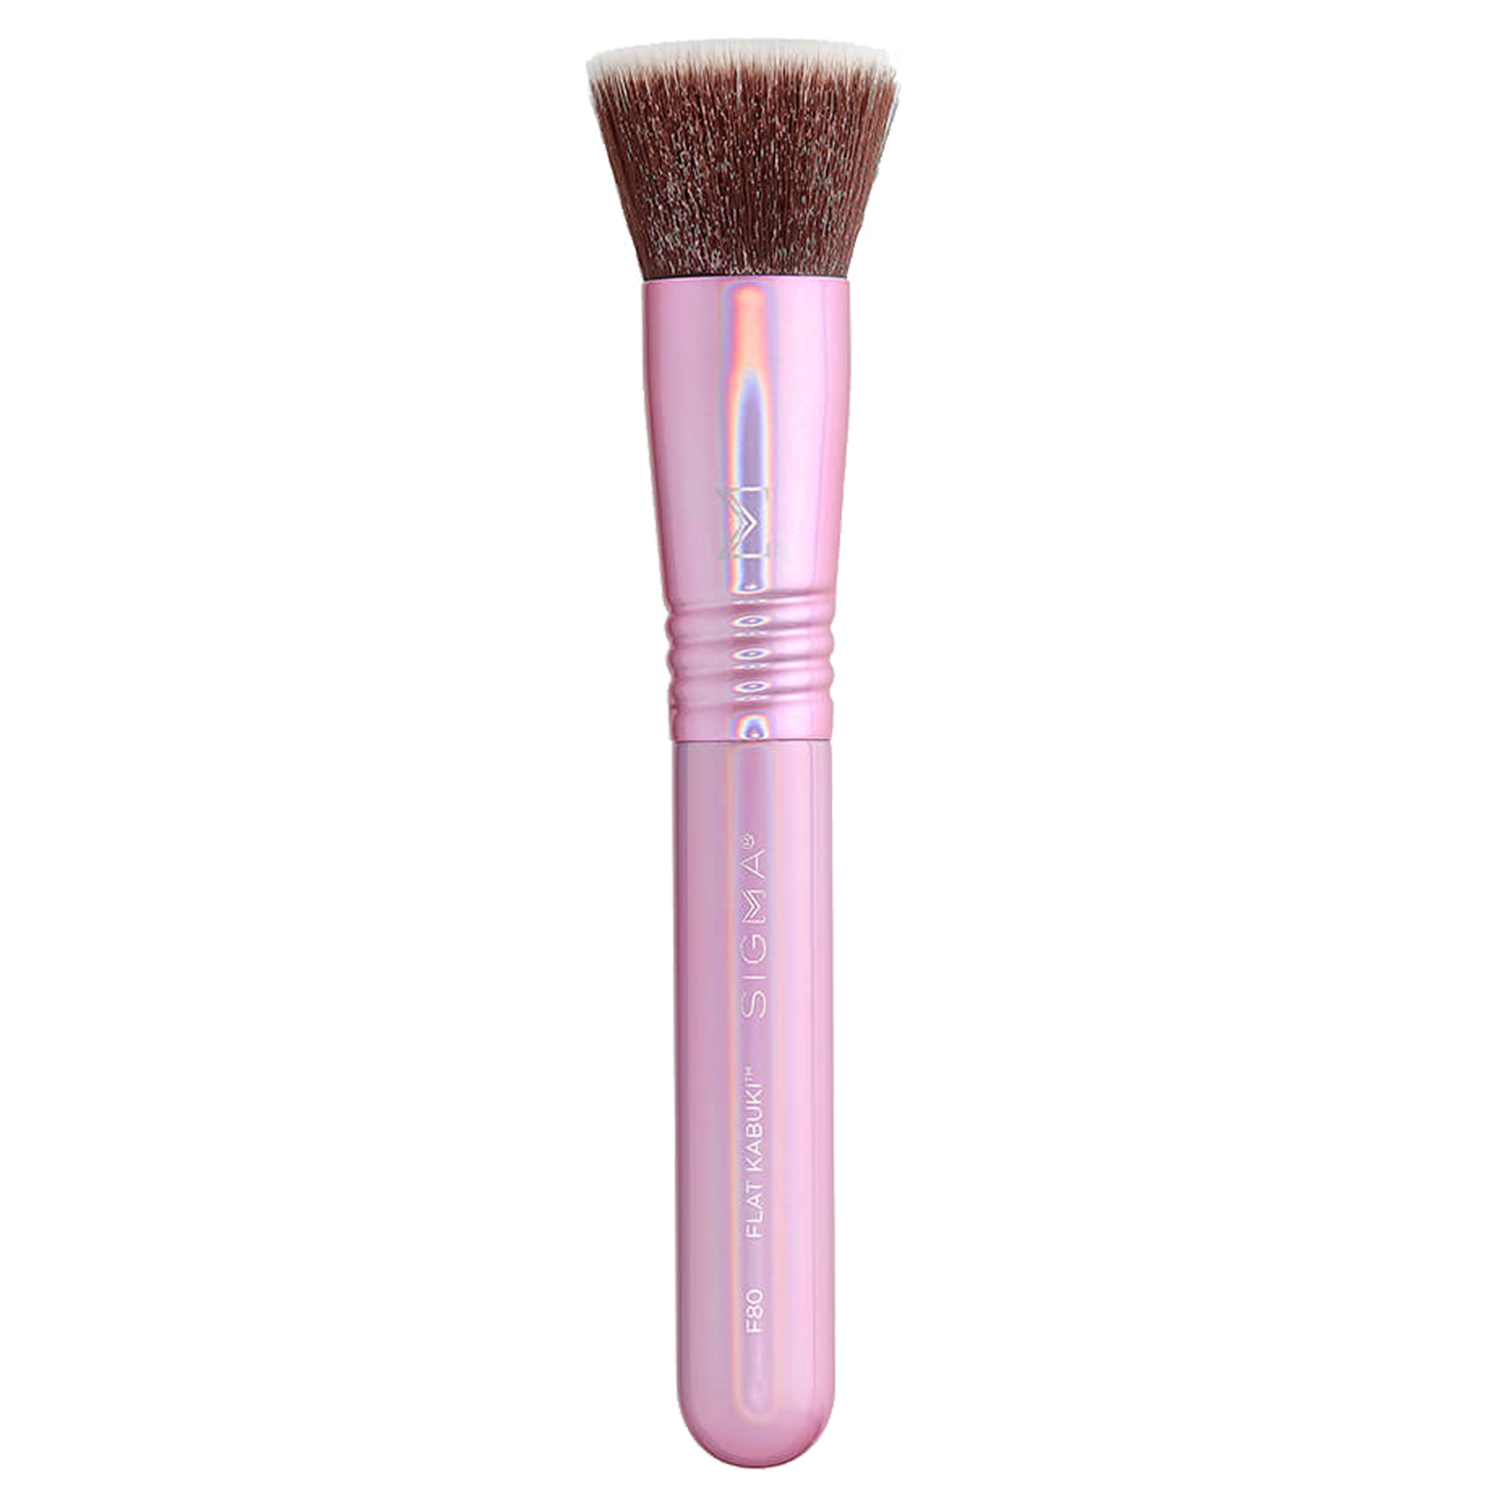 Sigma® Beauty F80 Flat Kabuki™ - The Pink Fund® Limited Edition at Socialite Beauty Canada